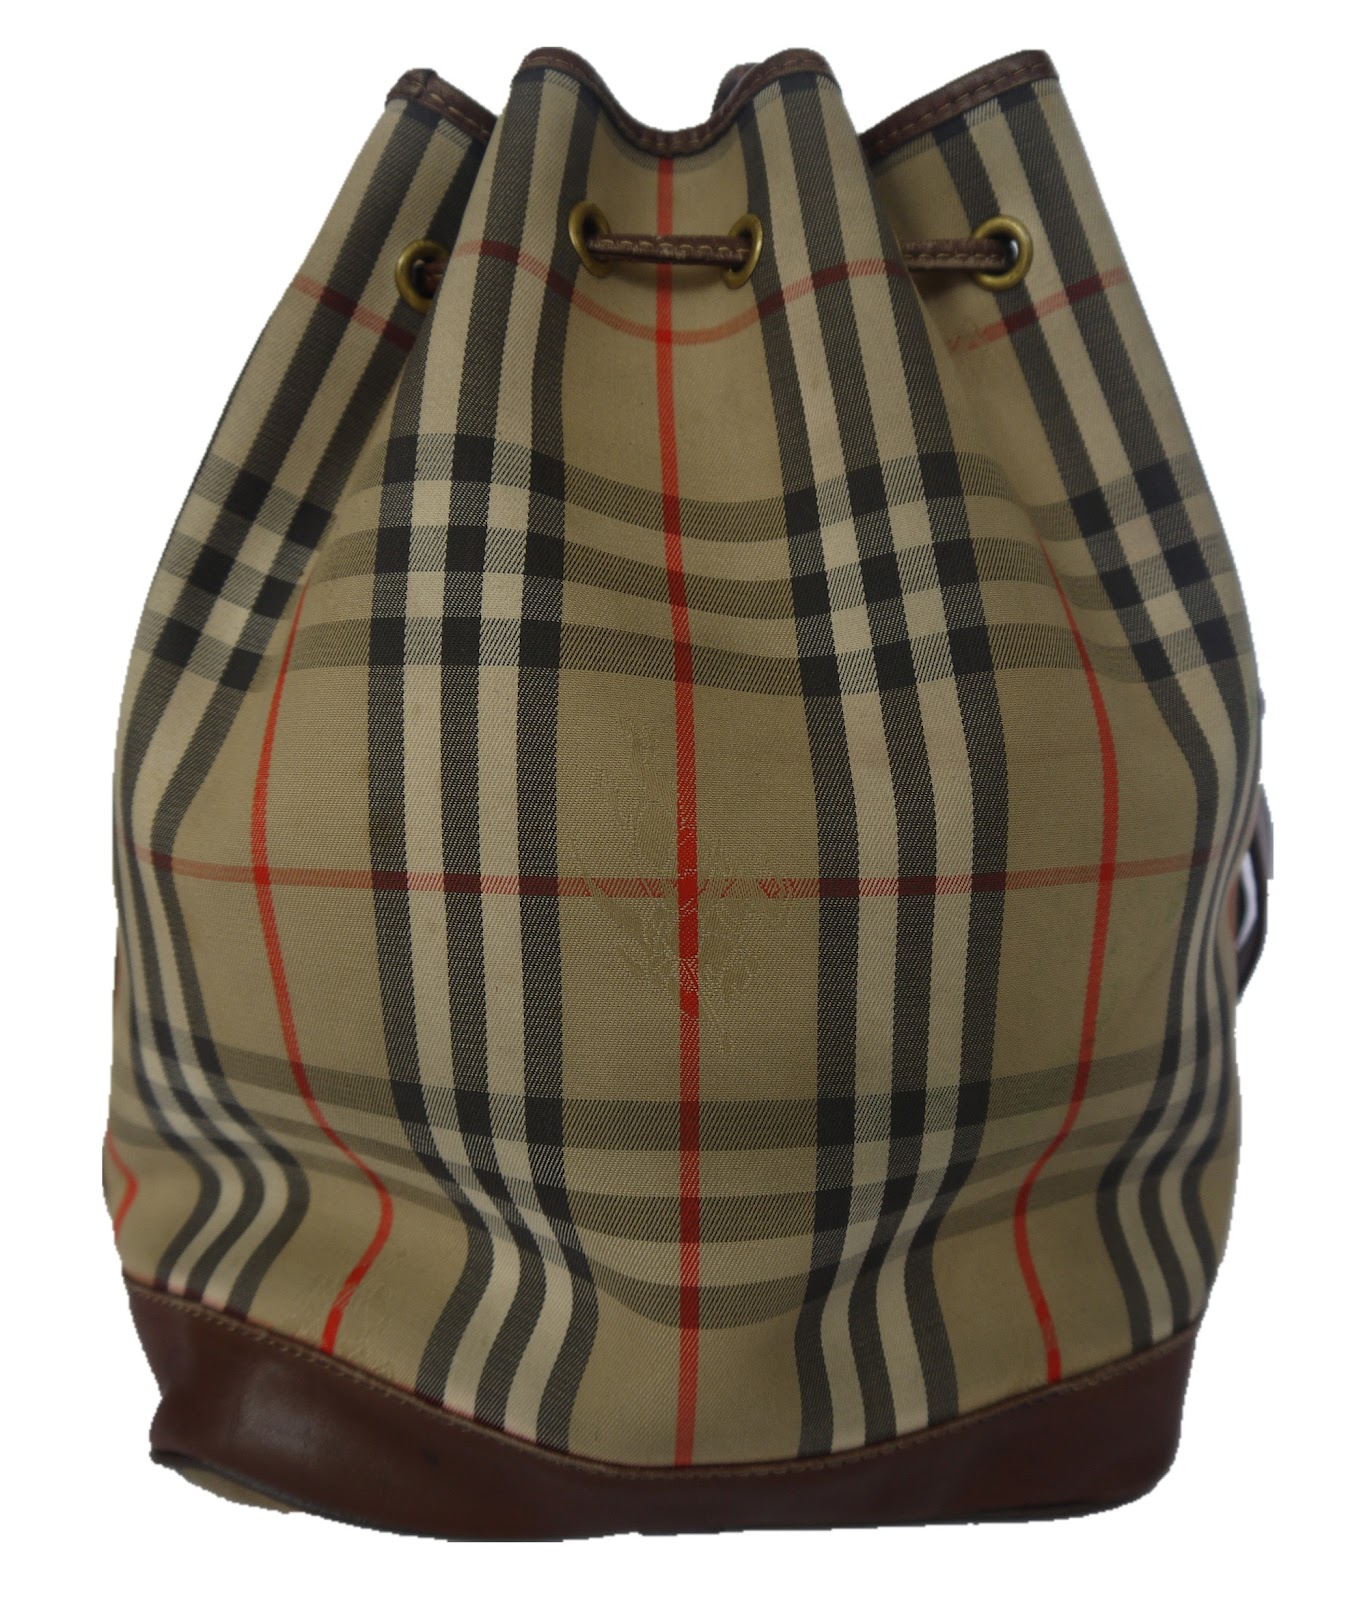 Truly Vintage: Burberry London Bucket Bag